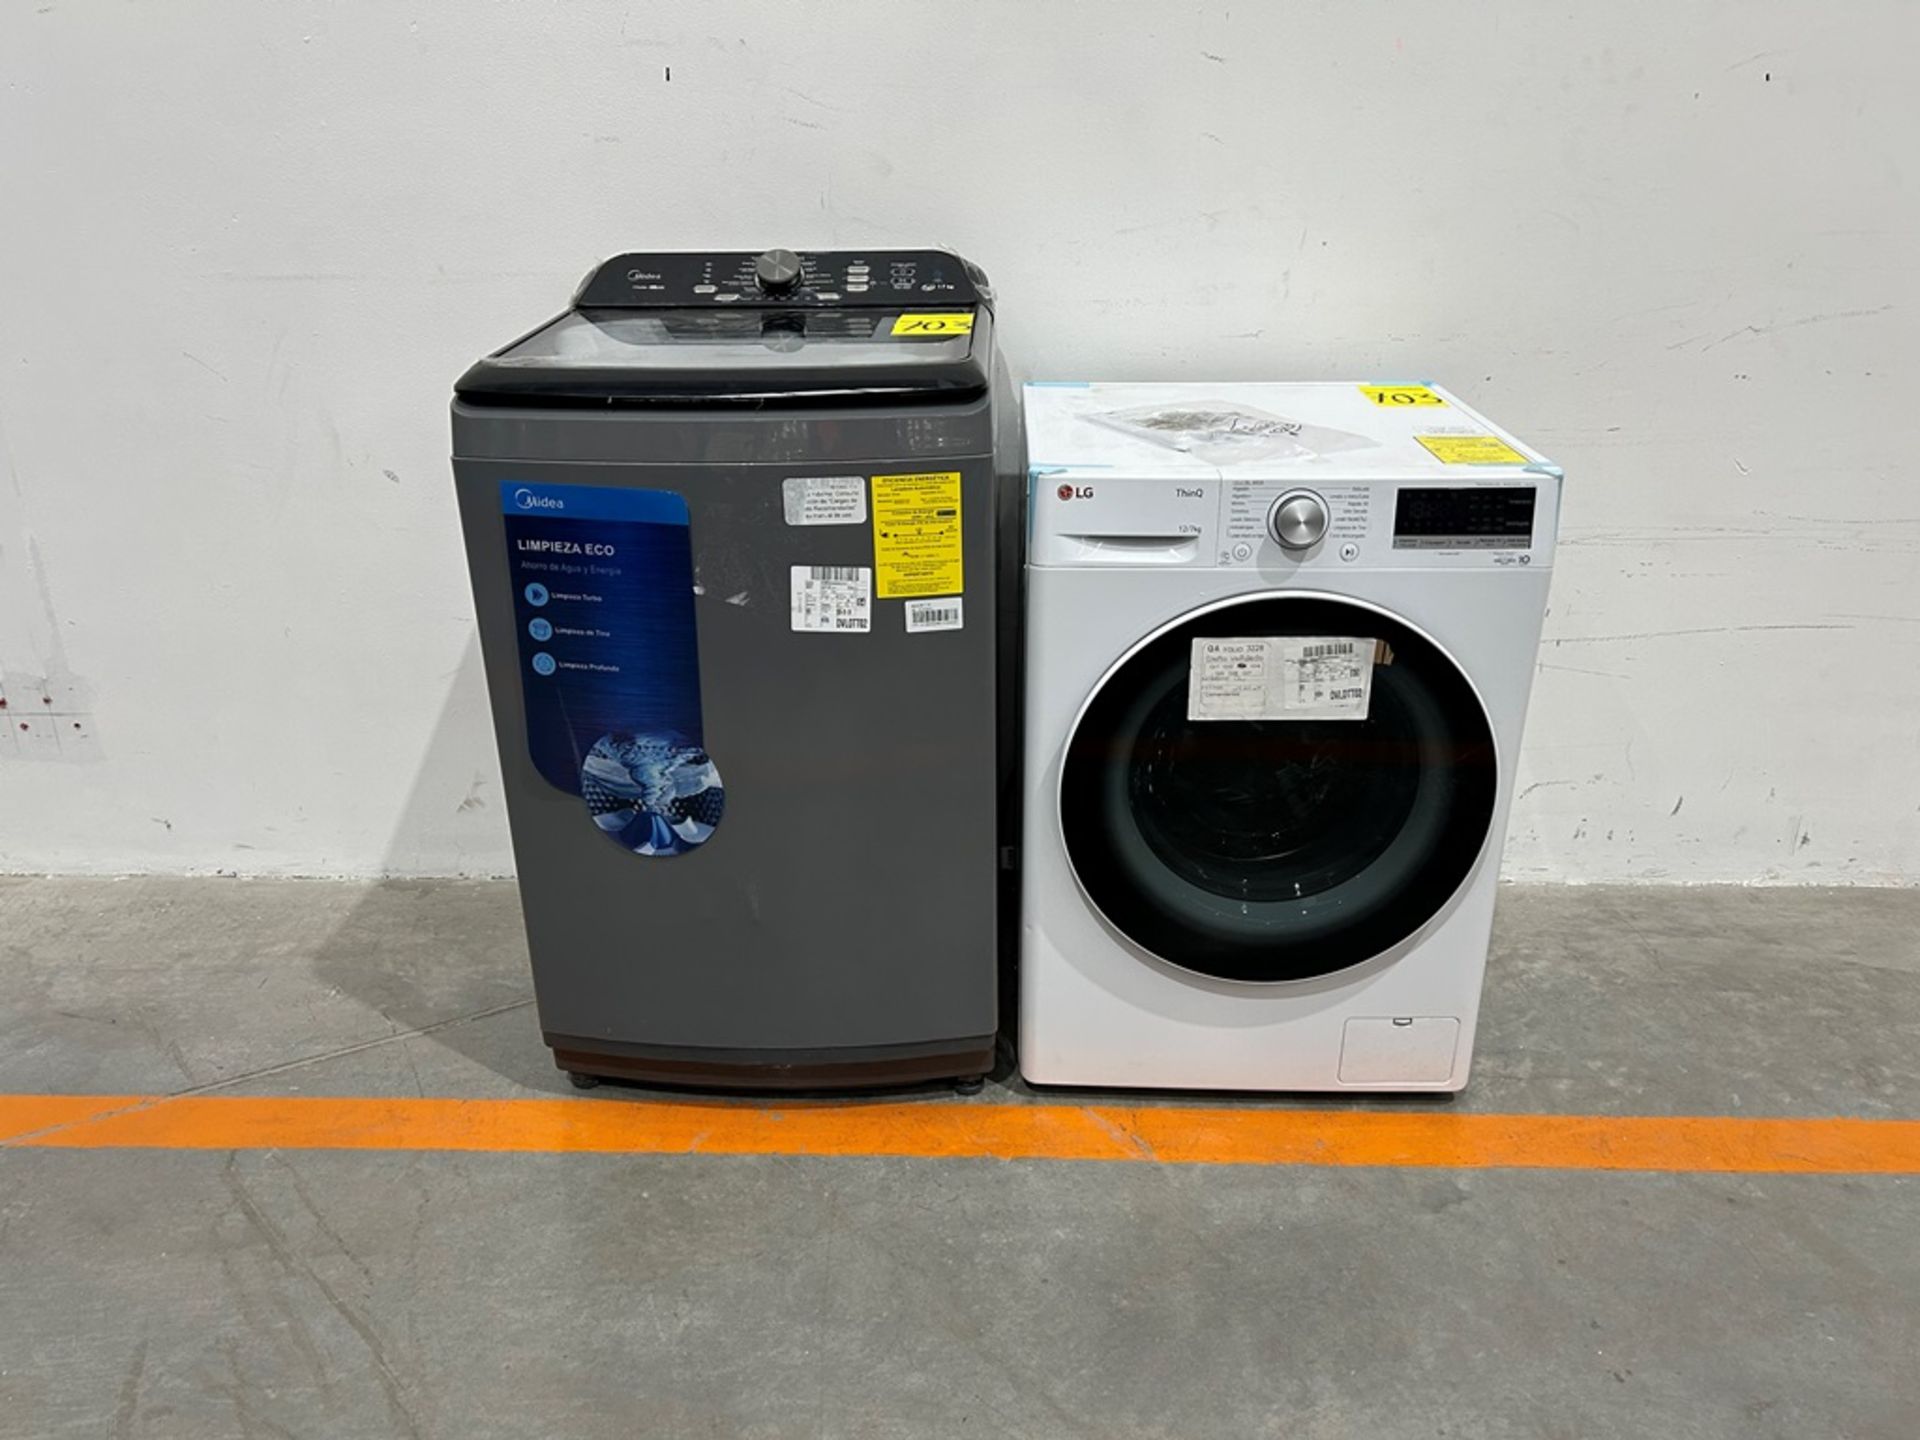 Lote de 2 lavadoras contiene: 1 Lavadora de 17 KG, Marca MIDEA, Modelo M1920901, Serie D00534, Colo